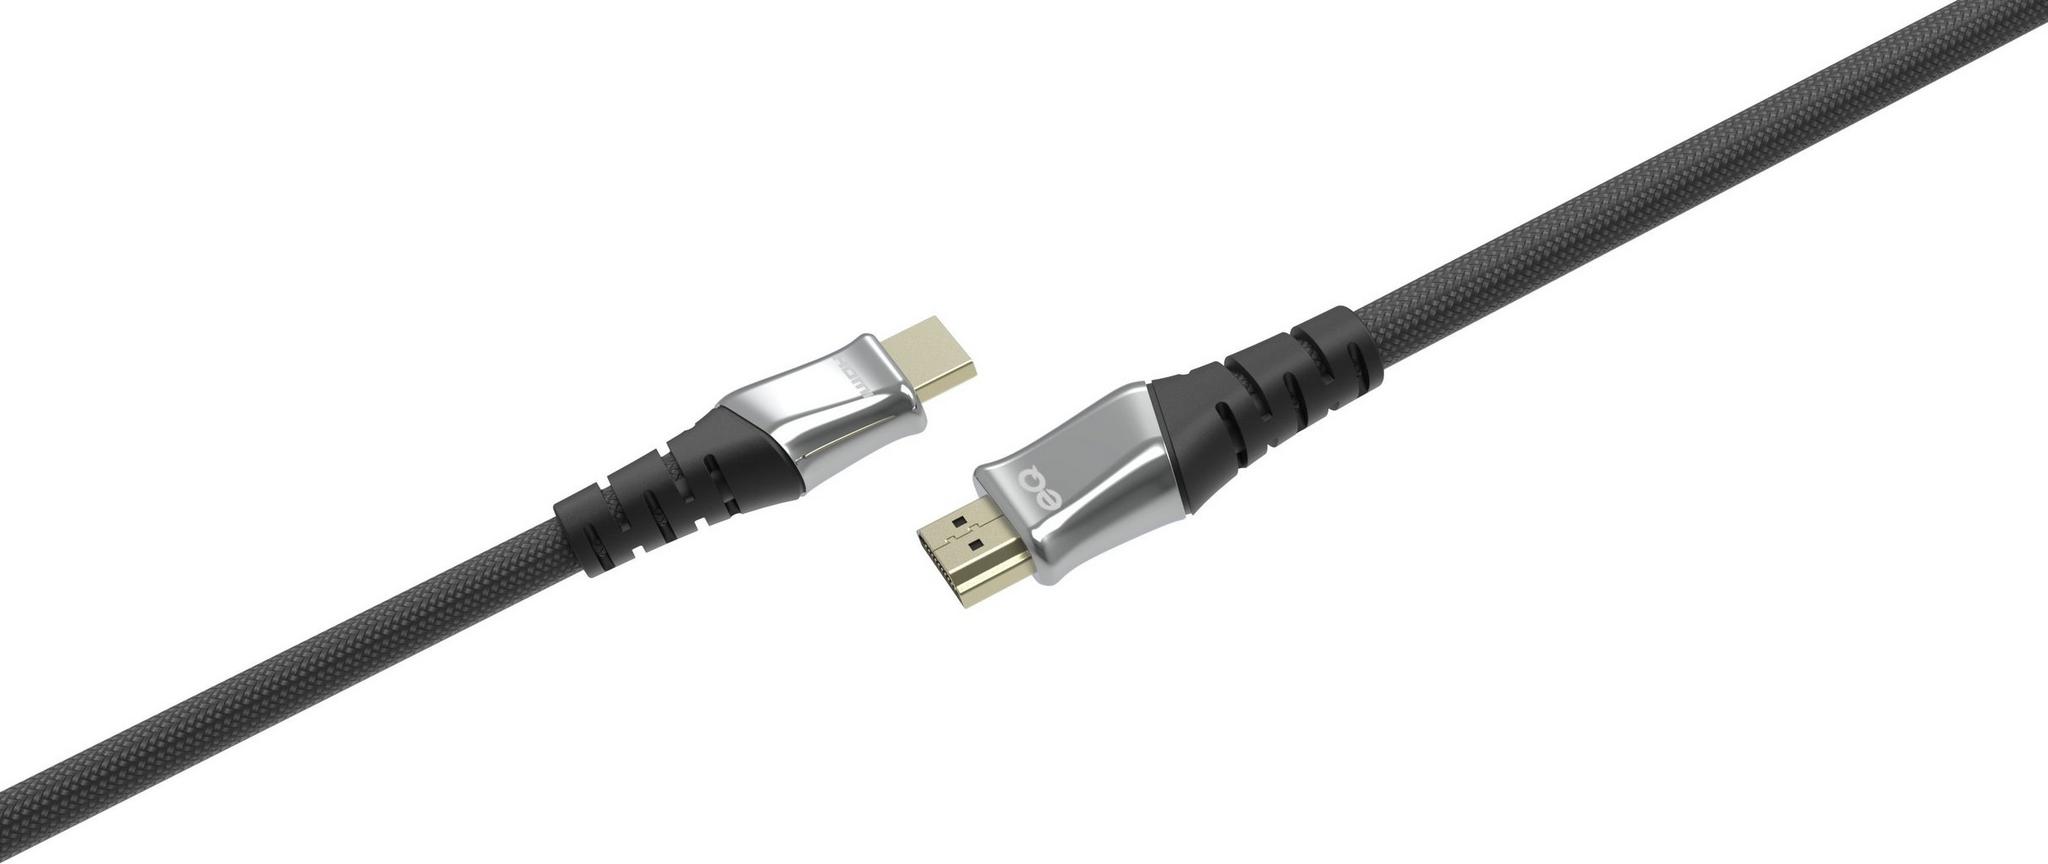 EQ 1.5M HDMI Cable (EQ-US015) - Black